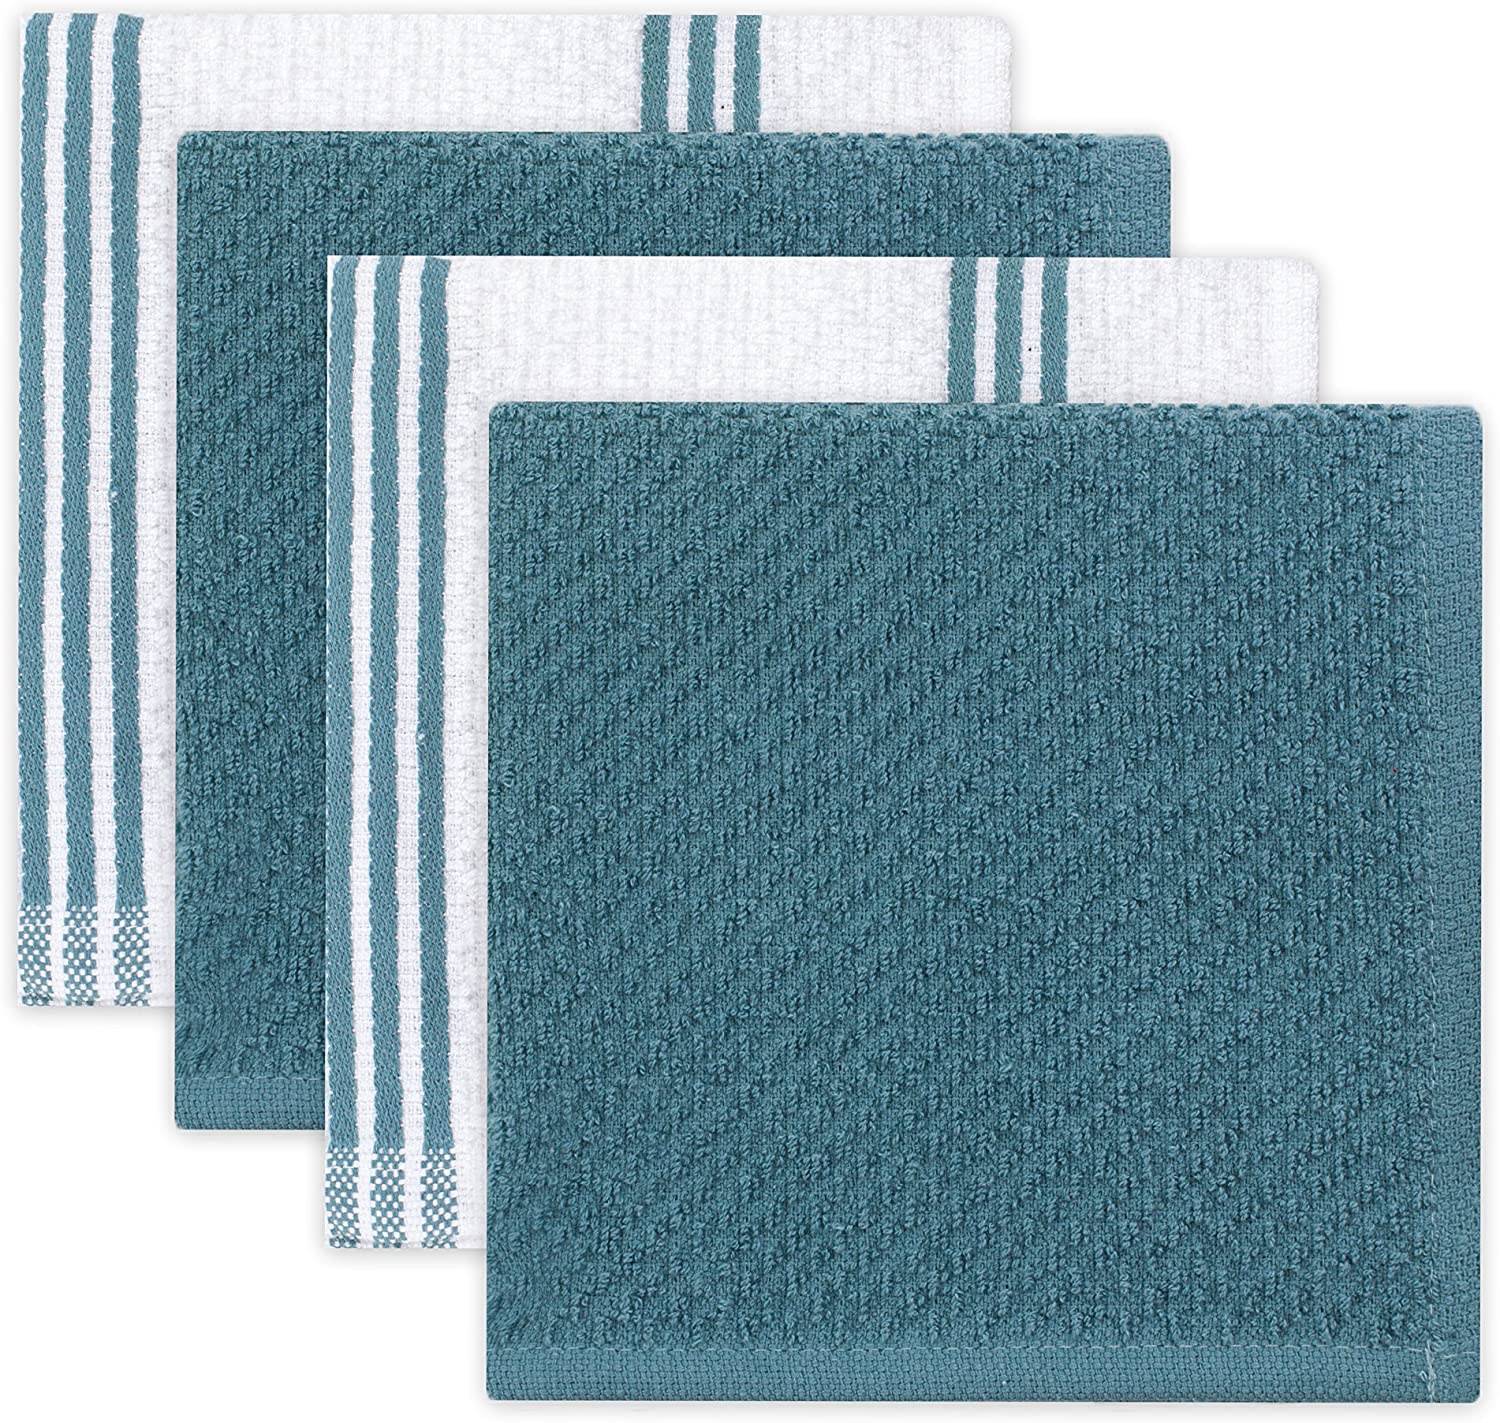 Kitchen Towels - Oven Mitts - Potholders - Towel Linen Set (8 Pc) Clean Classic Multi Color Combination - Kitchen Towel Potholder Scrubber Dishcloth